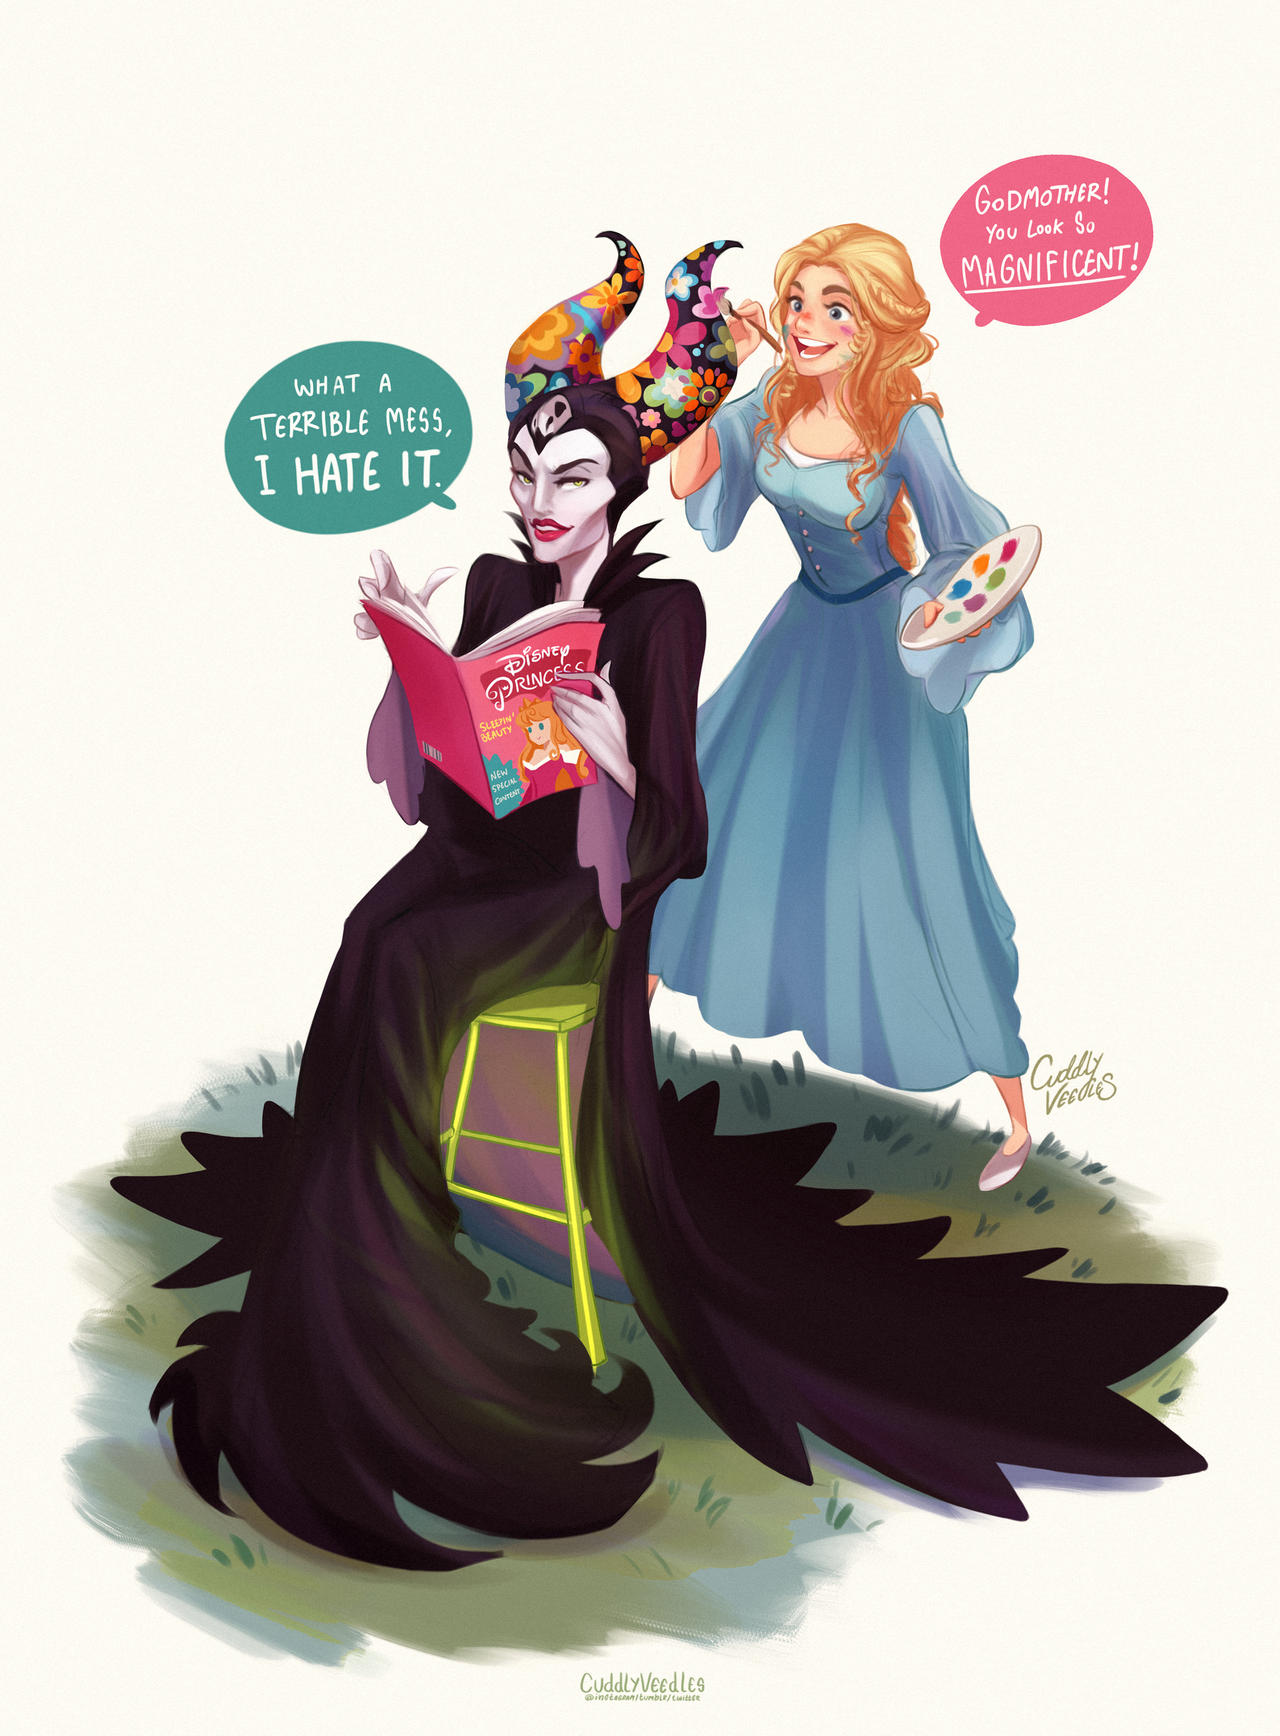 Maleficent: Mistress of Evil  Aurora png by mintmovi3 on DeviantArt